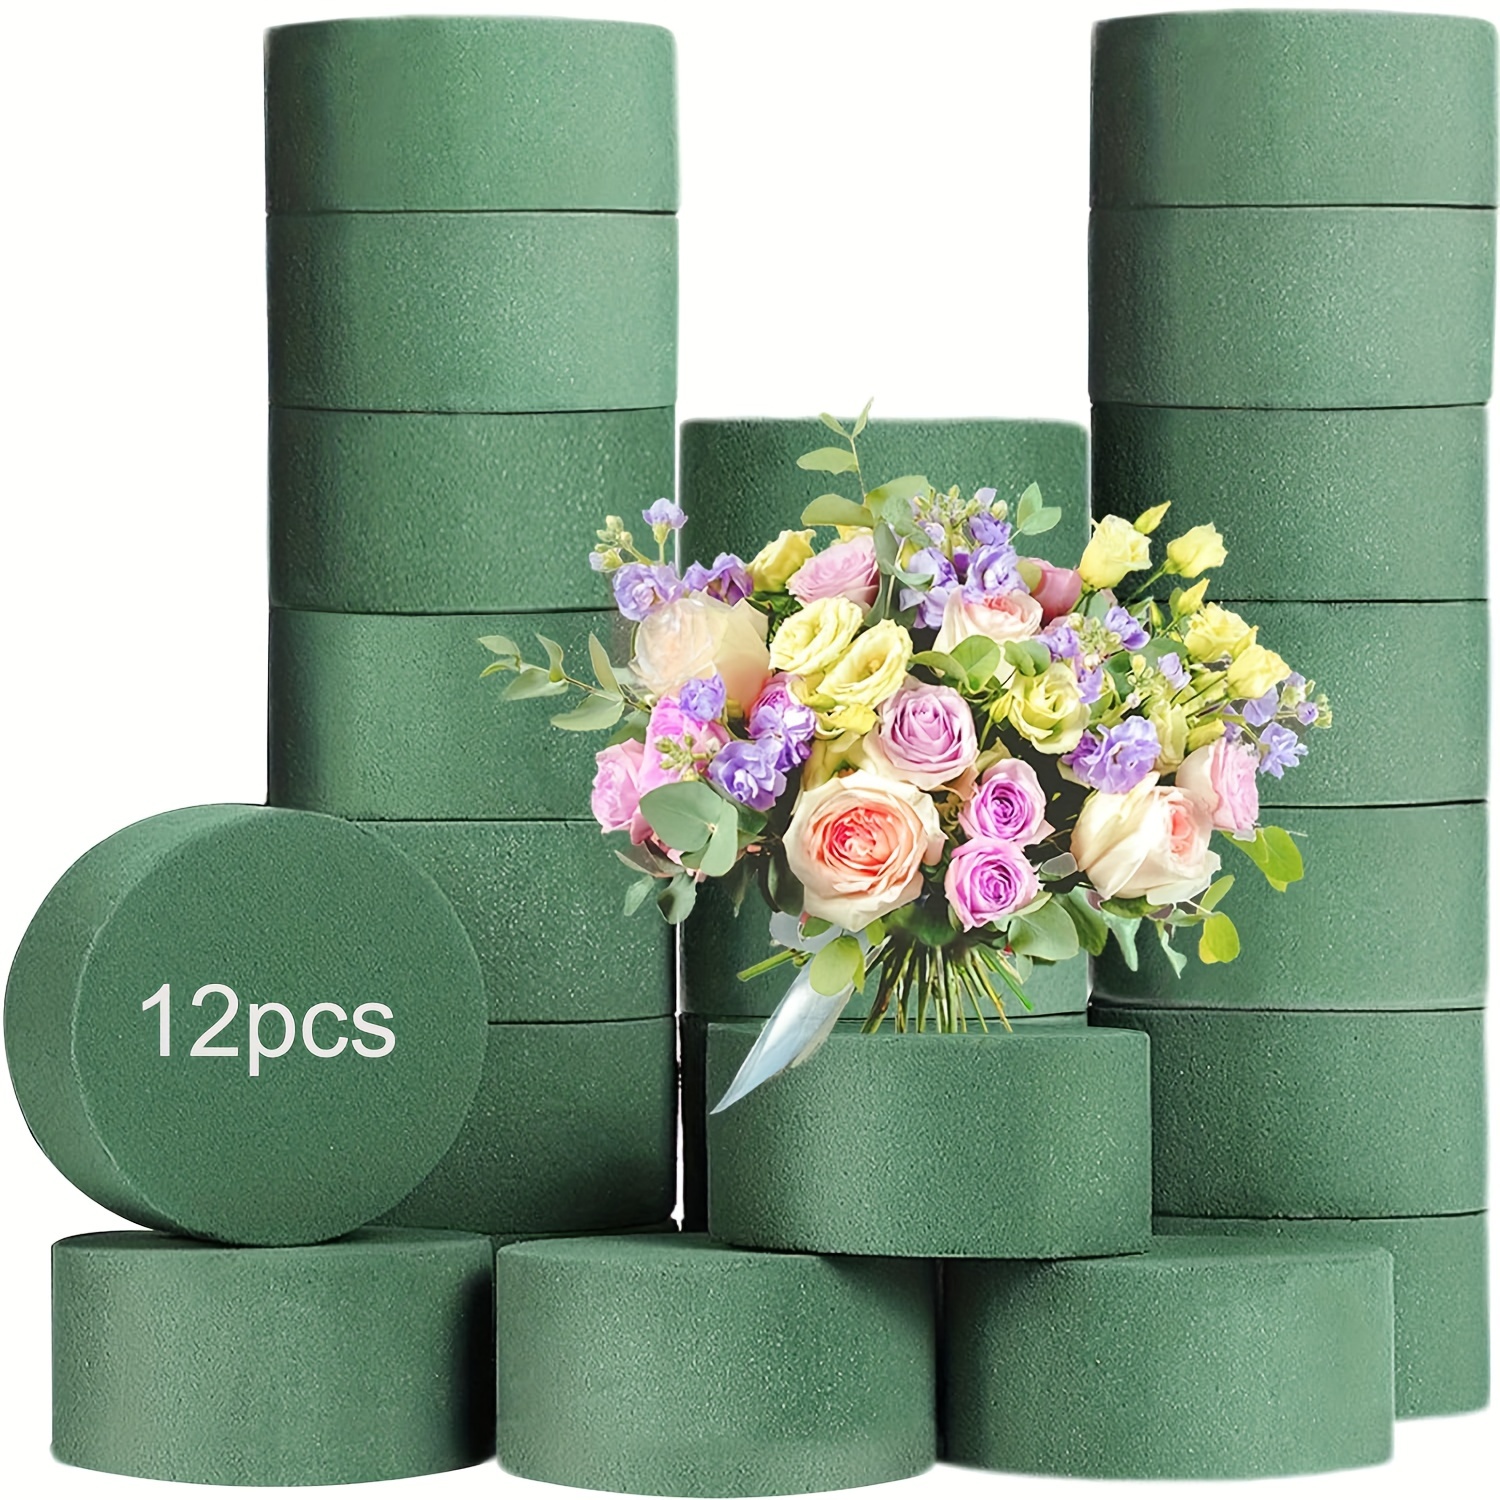 10PCS Floral Foam Bricks,Florist Styrofoam Green Wet Blocks